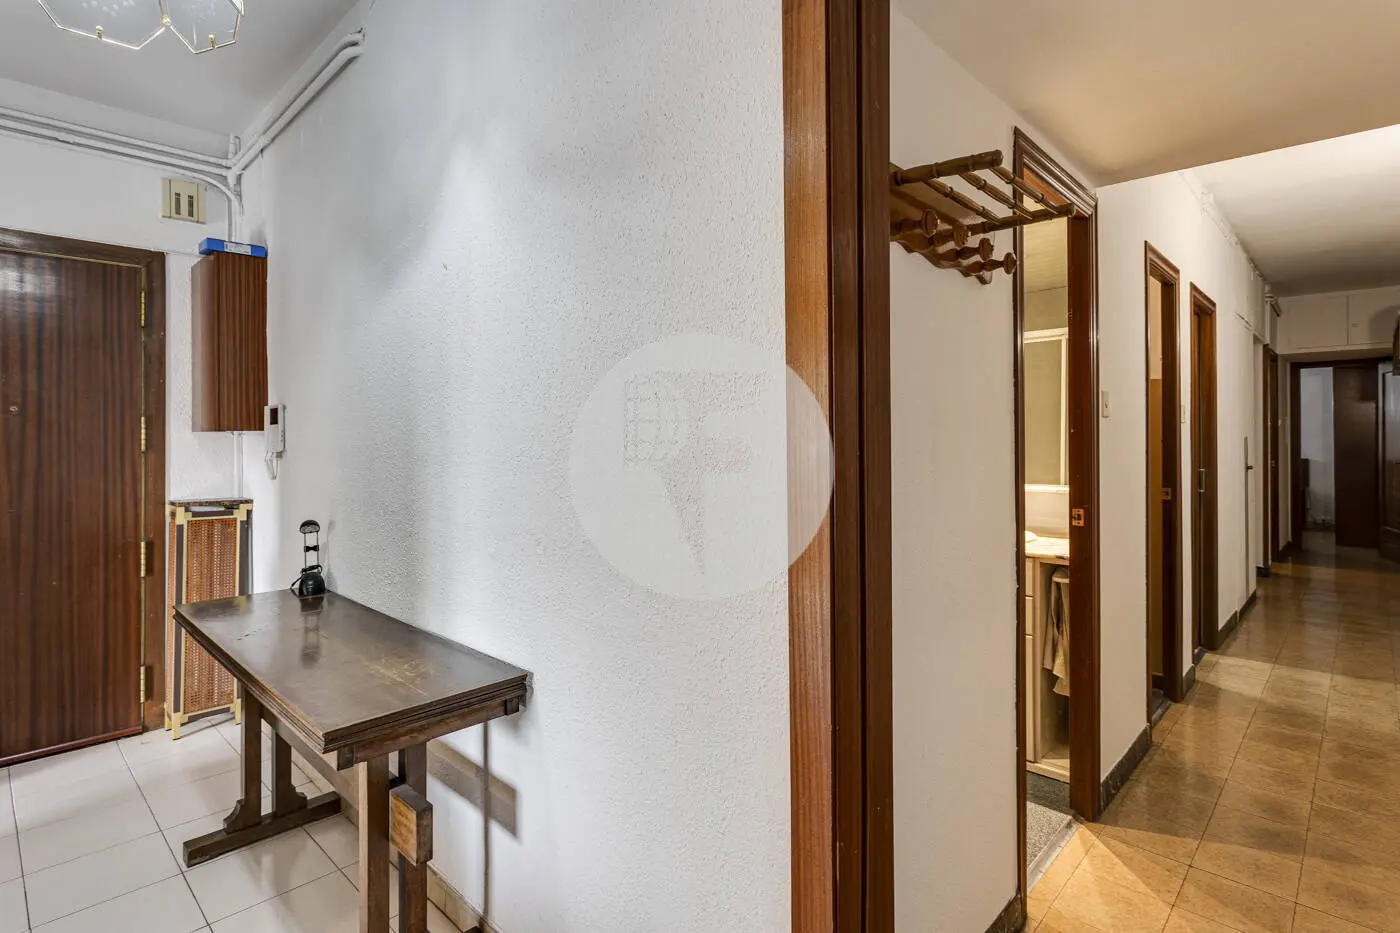 3-bedroom apartment located in the Nova Esquerra de l'Eixample neighborhood of Barcelona. 27